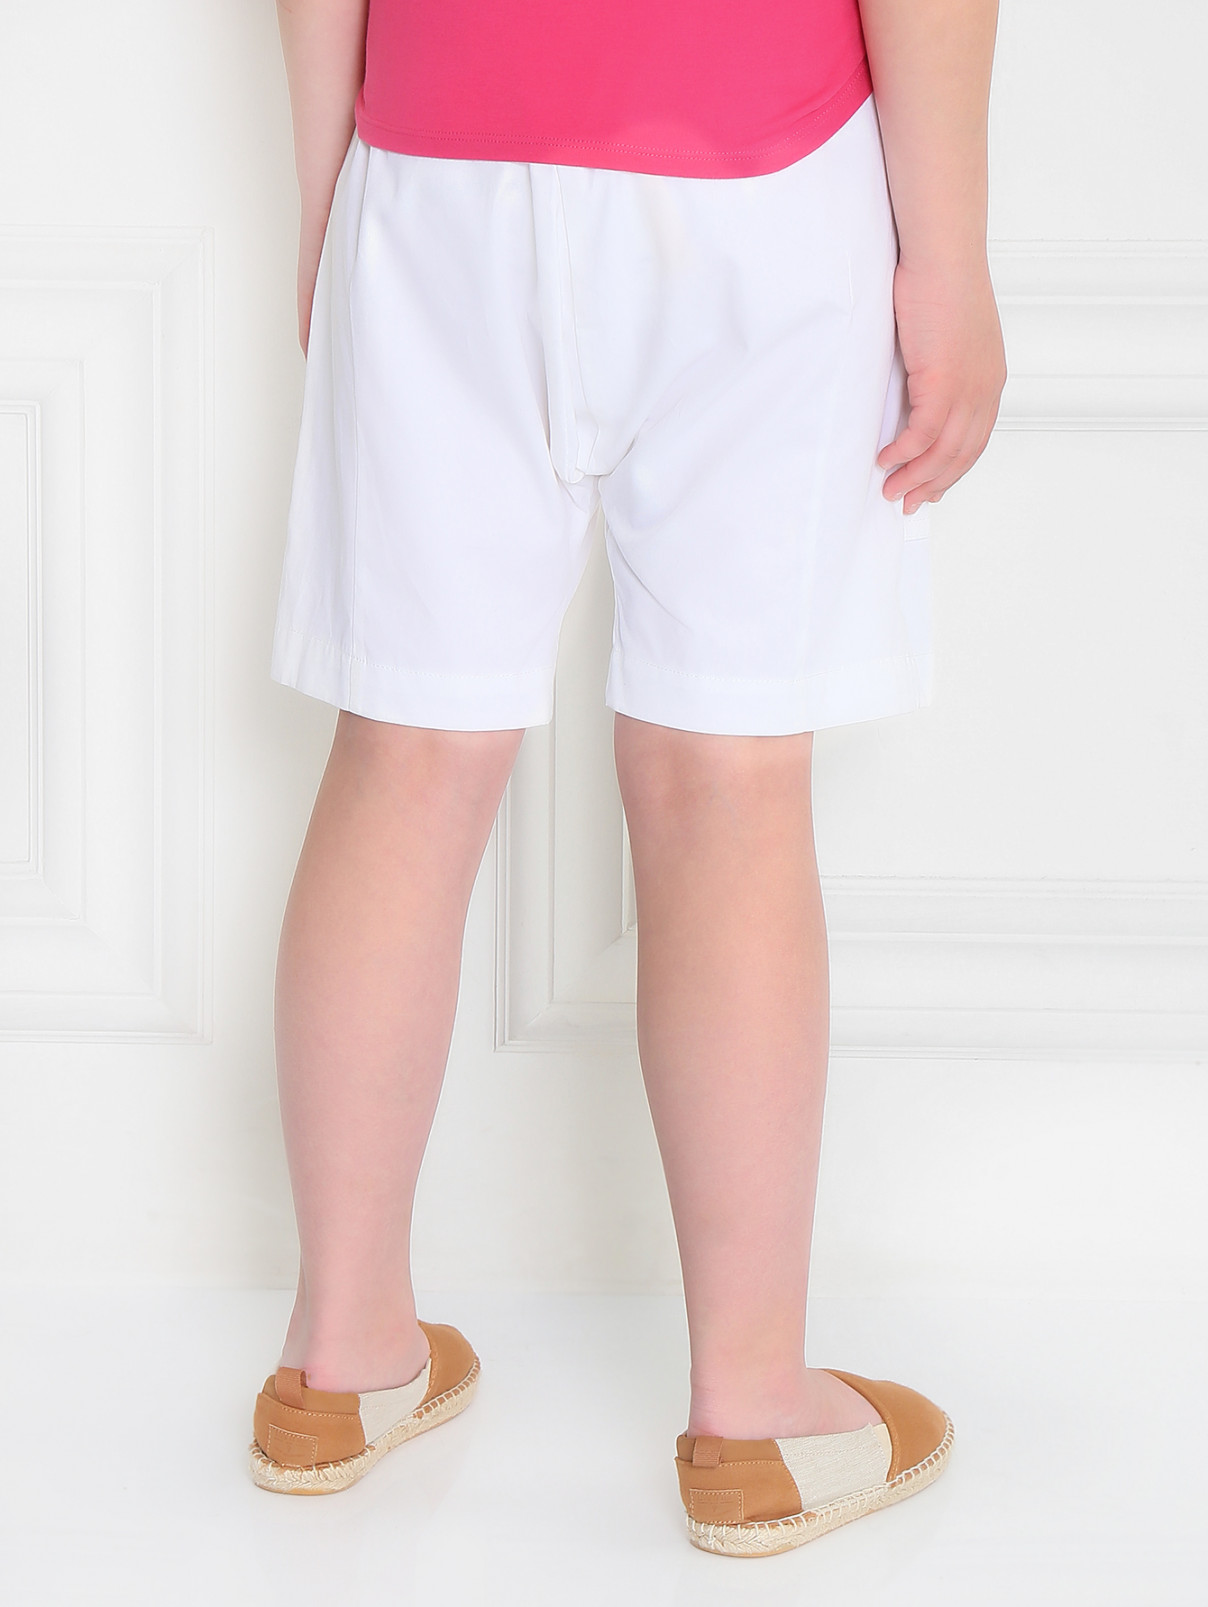 Бермуды из хлопка с карманами Marni  –  Модель Верх-Низ1  – Цвет:  Белый